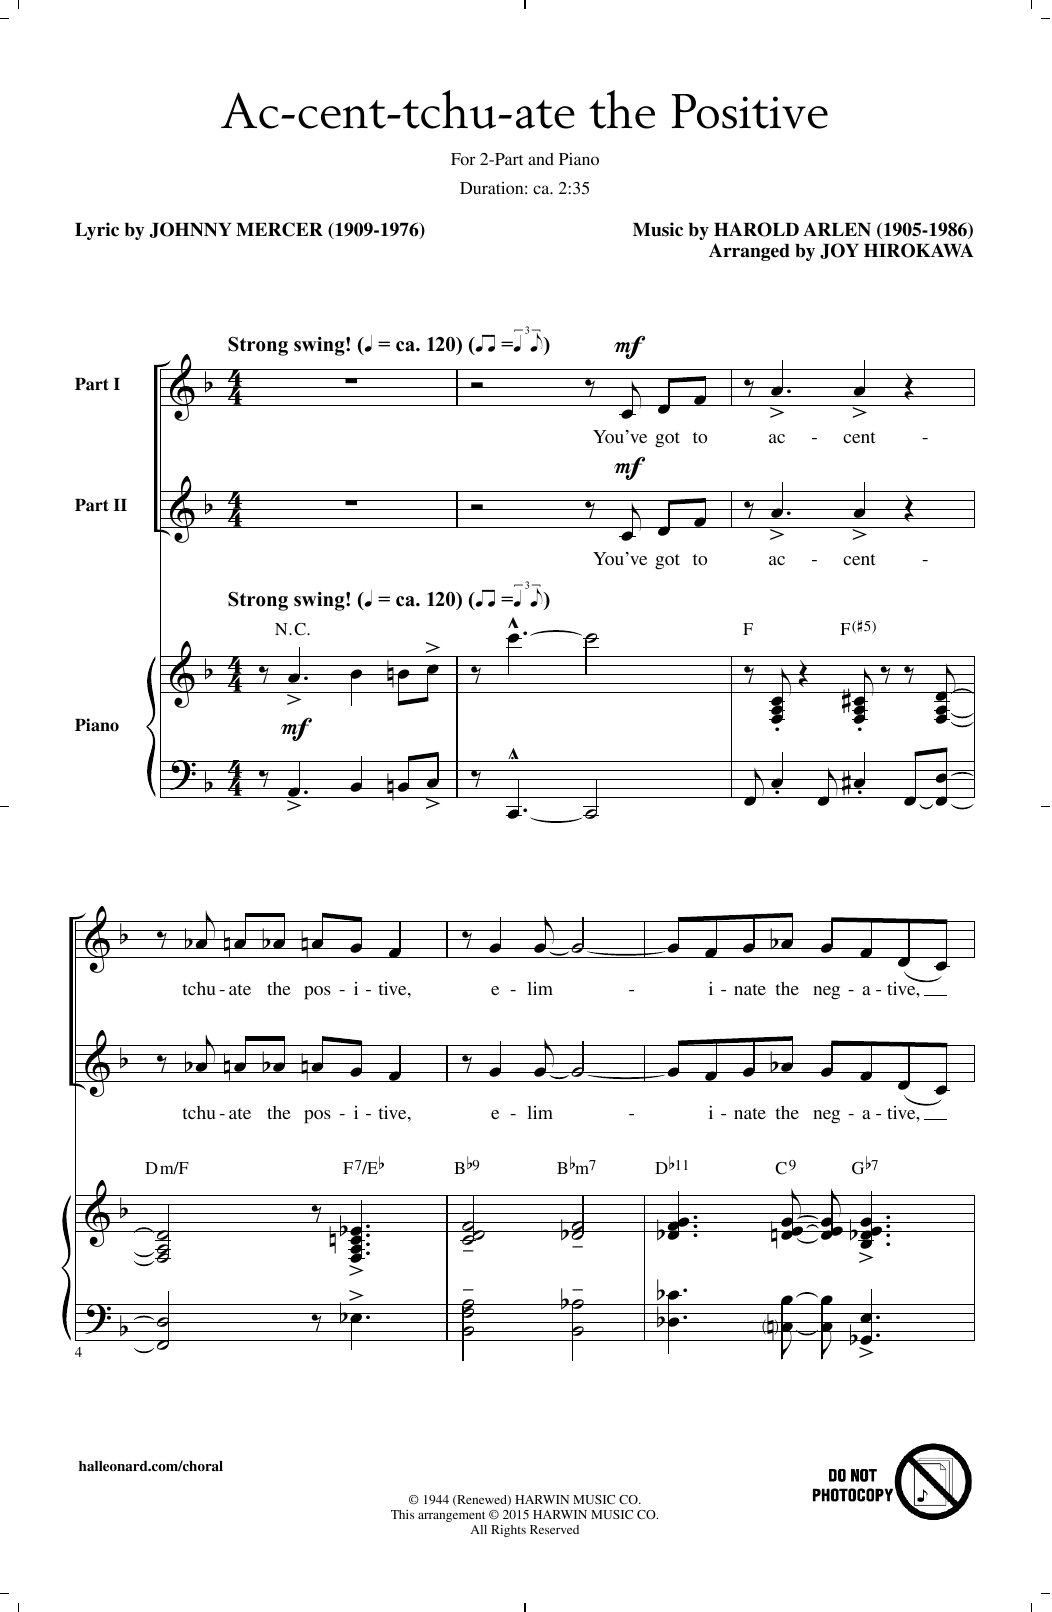 Harold Arlen Ac-cent-tchu-ate The Positive (arr. Joy Hirokawa) Sheet Music Notes & Chords for 2-Part Choir - Download or Print PDF